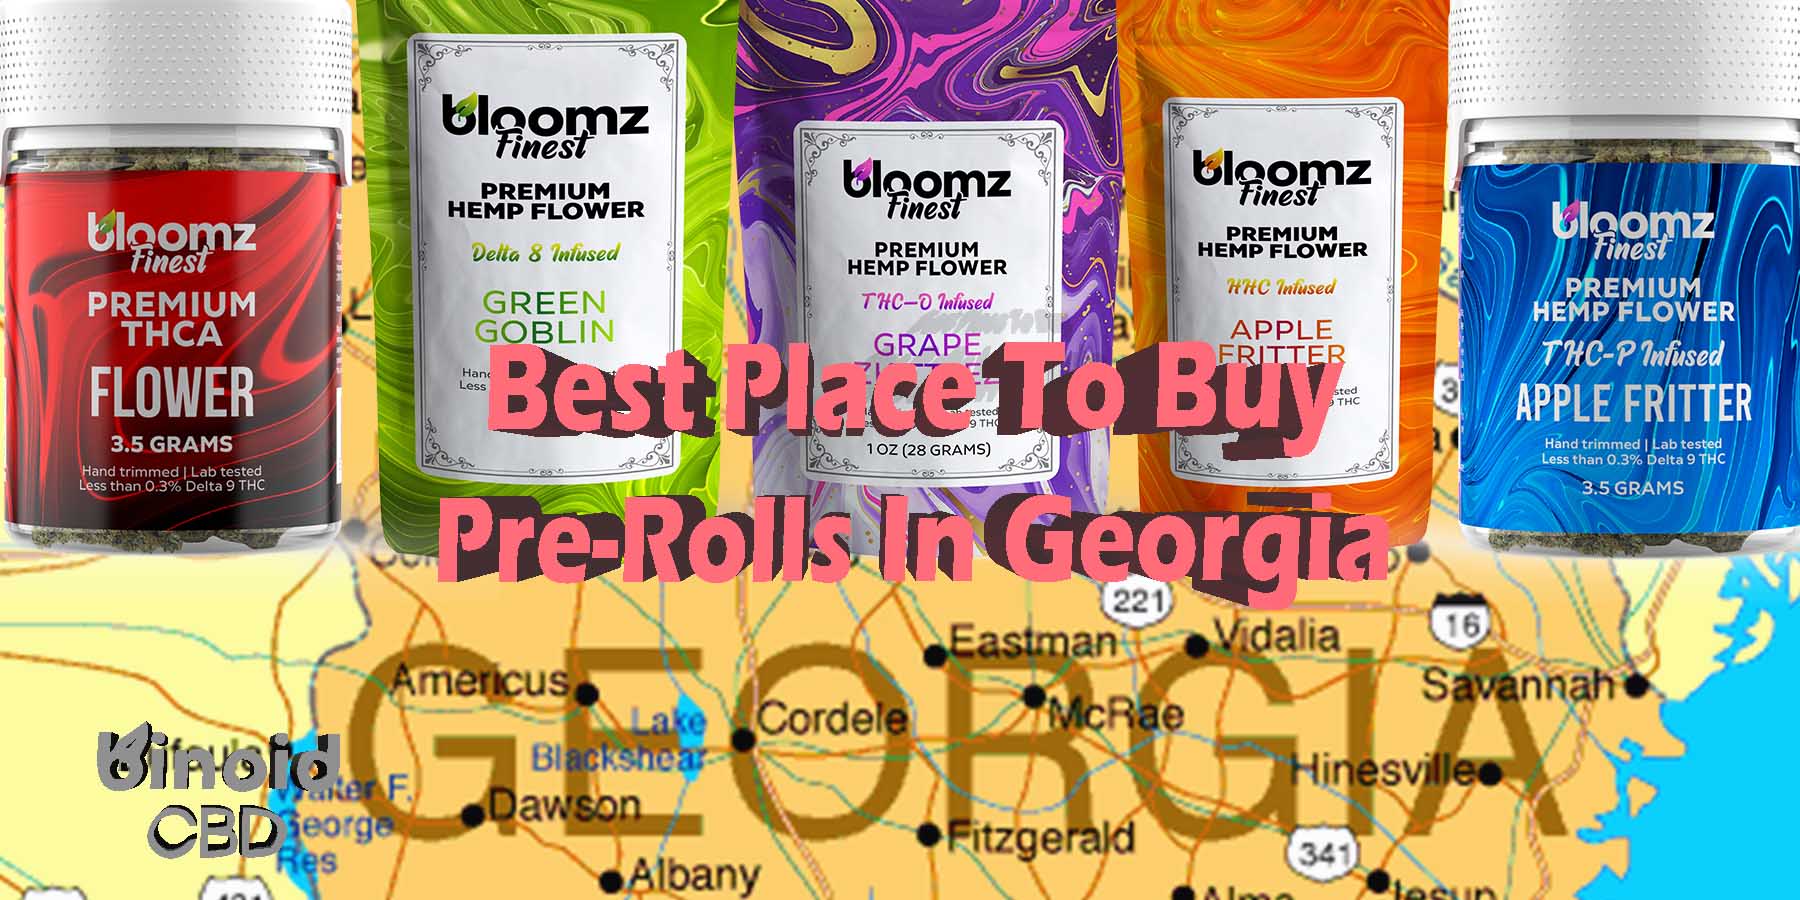 Best Place To Buy Pre-Rolls In Georgia Legal Quality Hemp For Sale Near Me Shop Pre-Rolls Legal For Sale Near Me Shop Best Brand How To Purchase Online Binoid